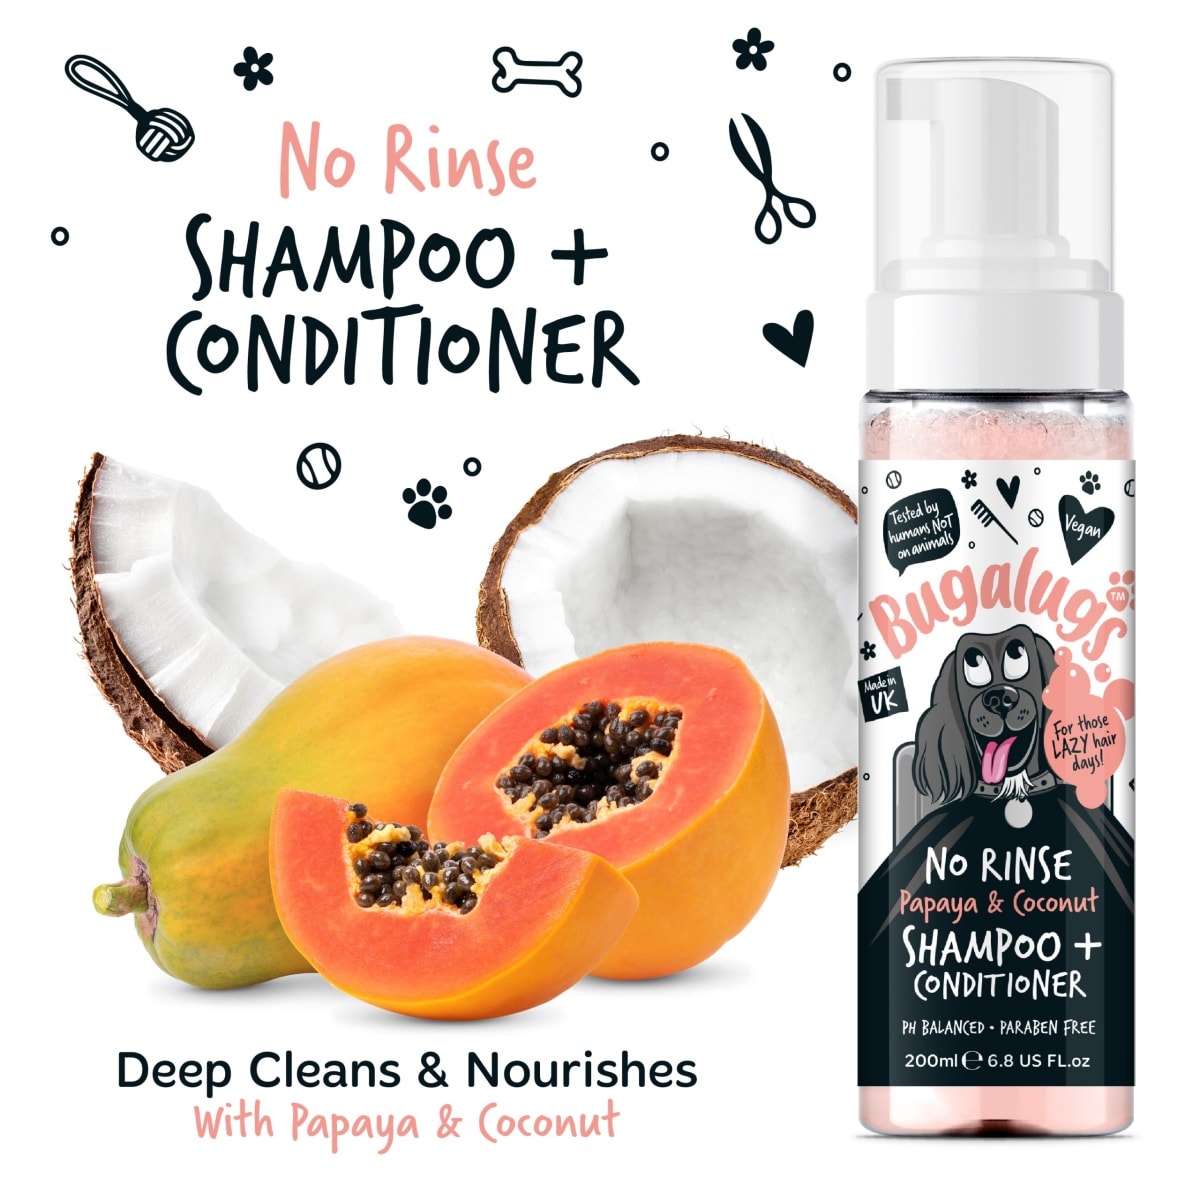 Bugalugs - No Rinse Papaya & Coconut Shampoo + Conditioner 200ml Main Image